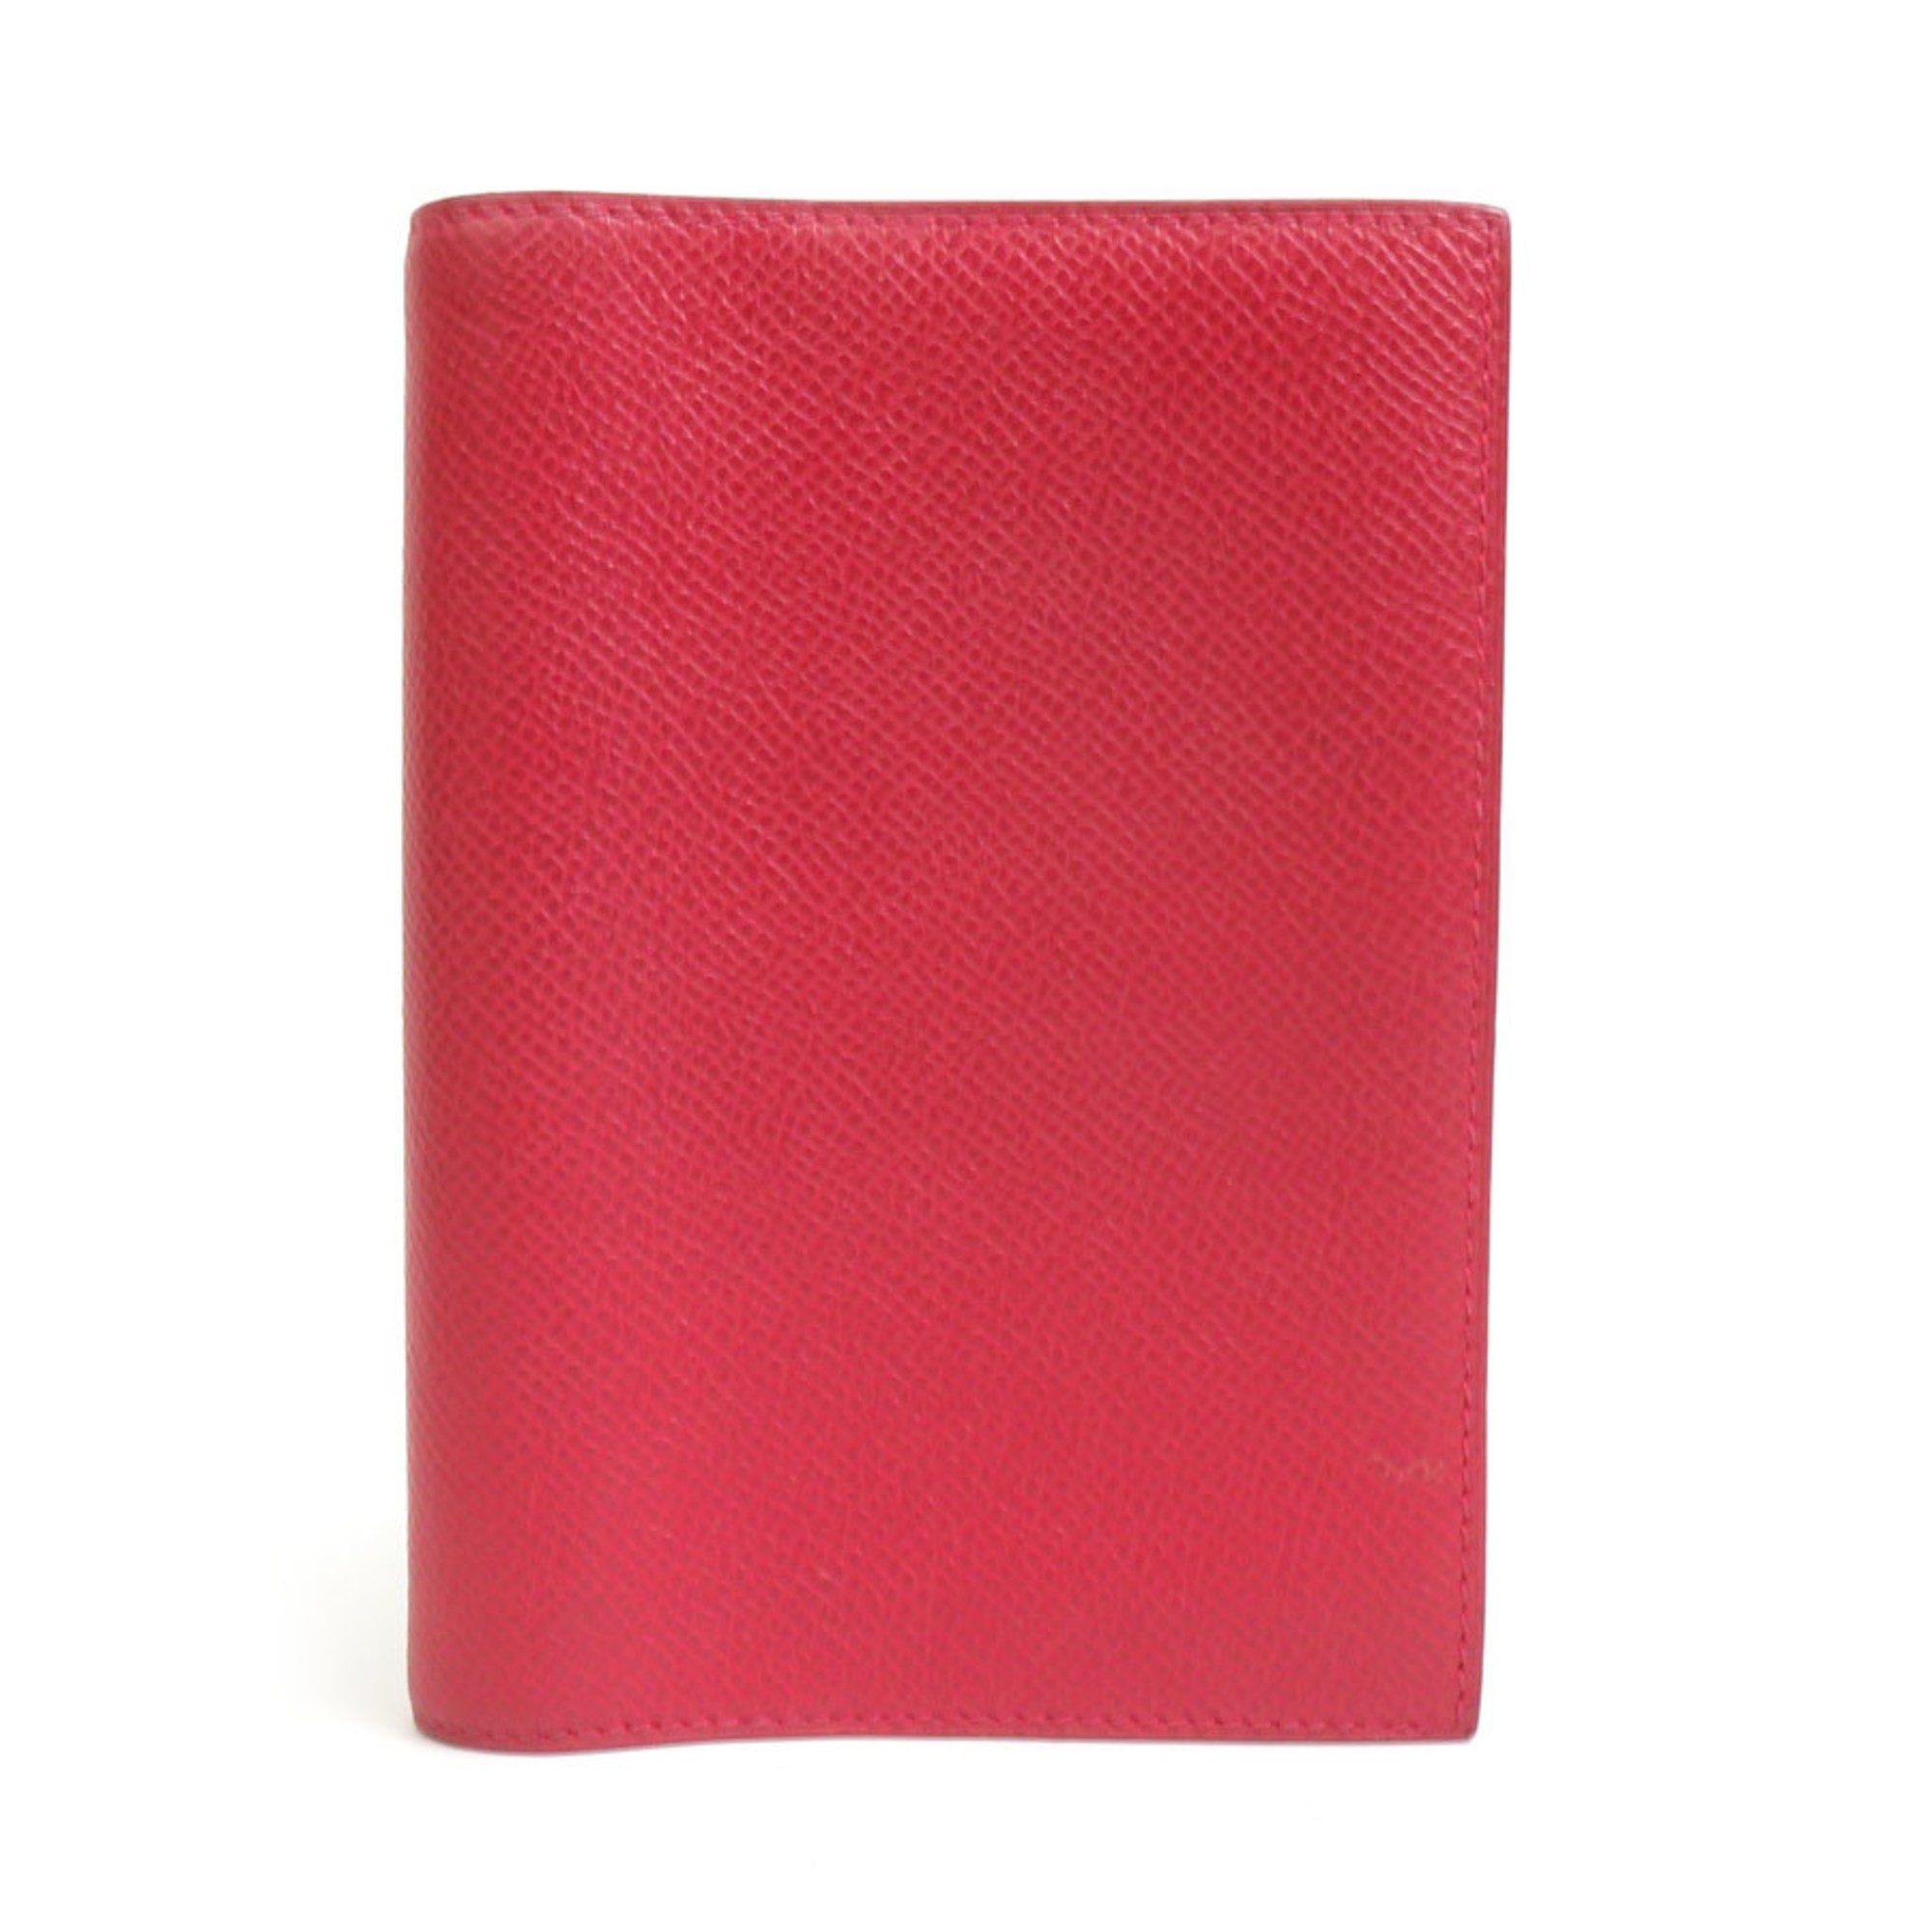 Hermes HERMES Notebook Cover Leather Dark Red Women's e58628f